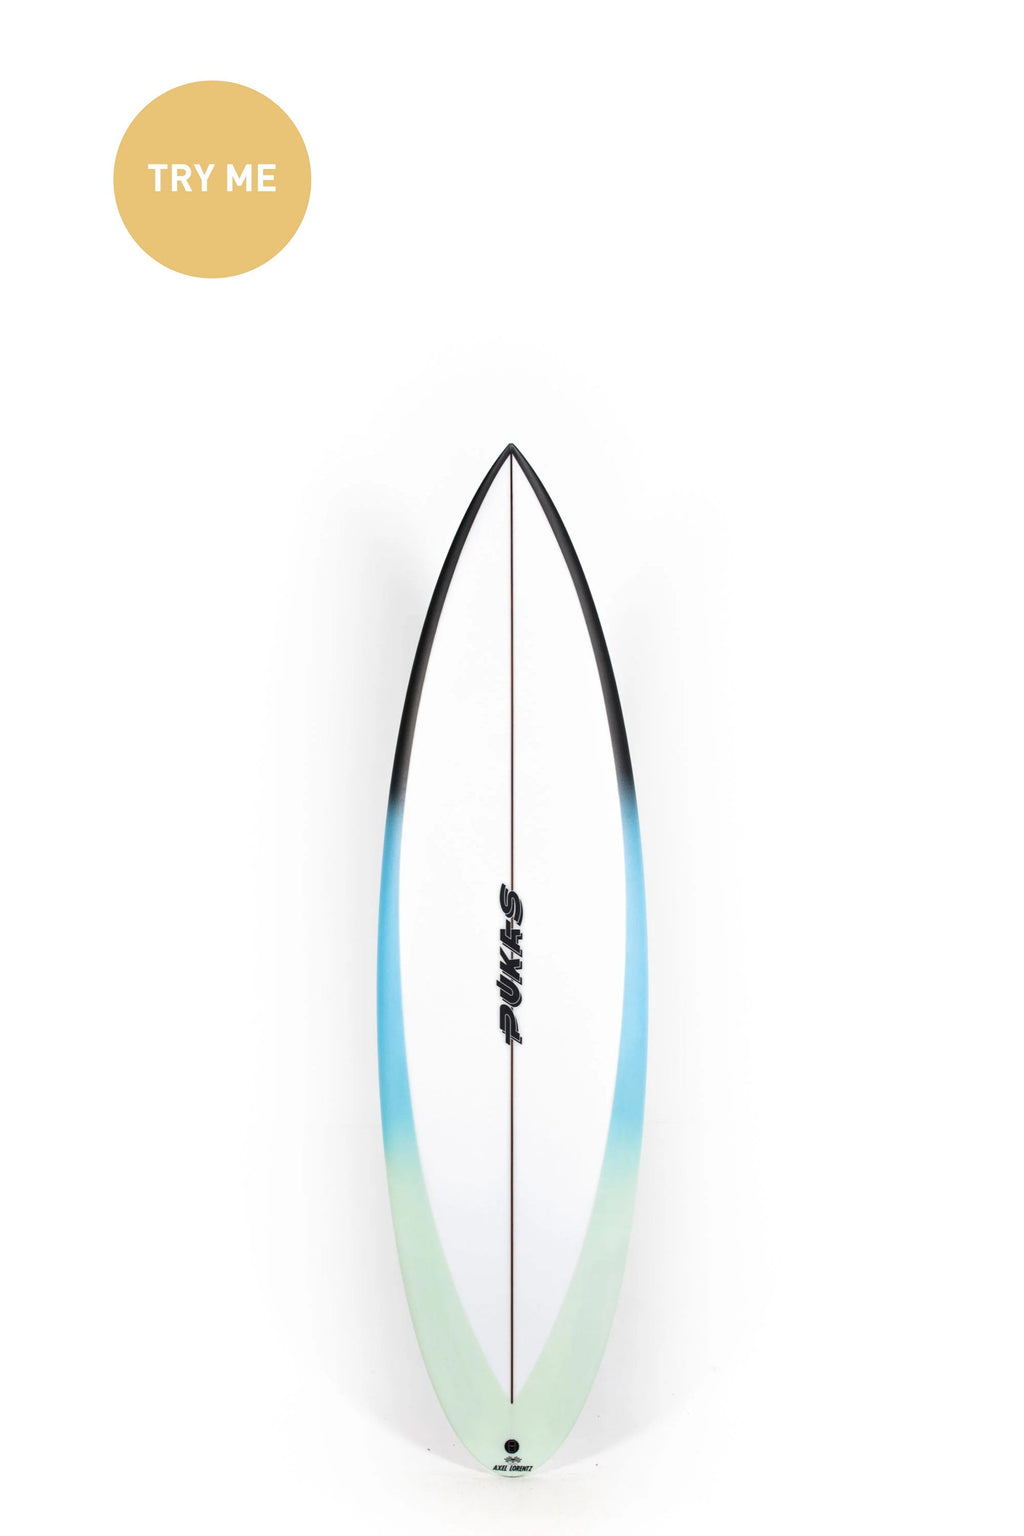 2ND HAND Pukas Surfboard - TASTY TREAT ALL ROUND by Axel Lorentz - 6'3" x 20 x 2.7 x 35,97L - AX09161